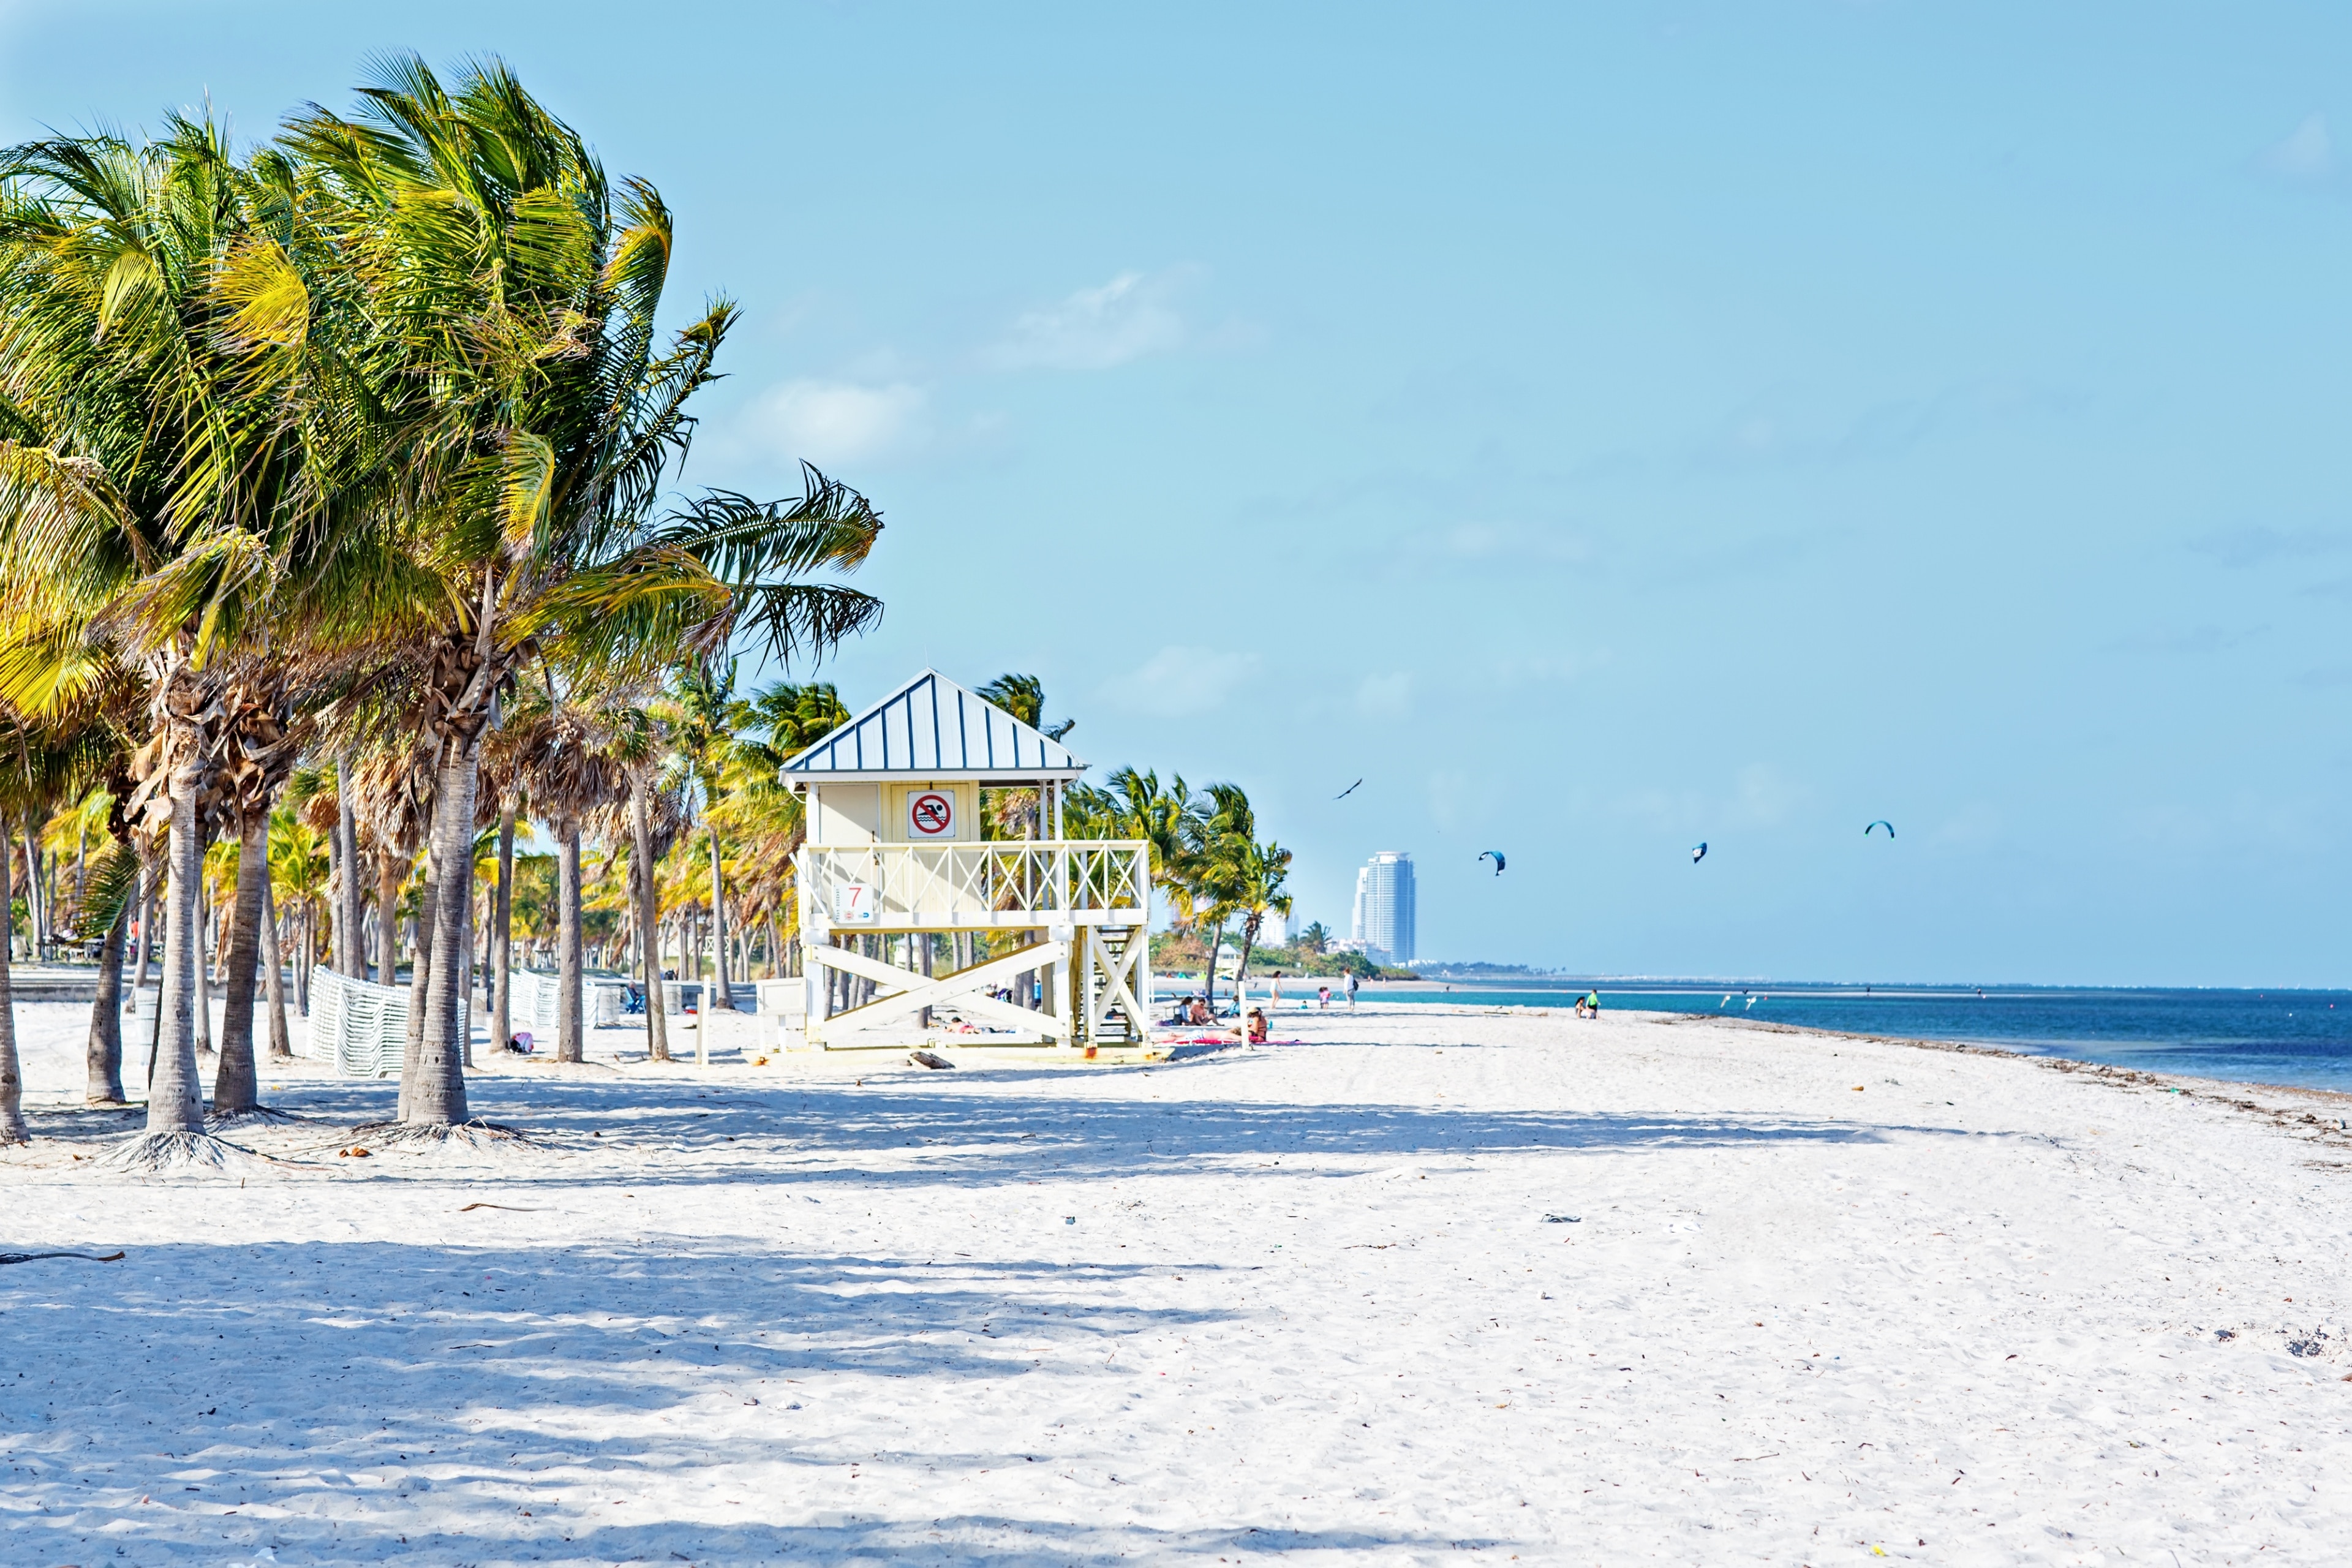 Key Biscayne Vacation Rentals, Miami: house rentals & more